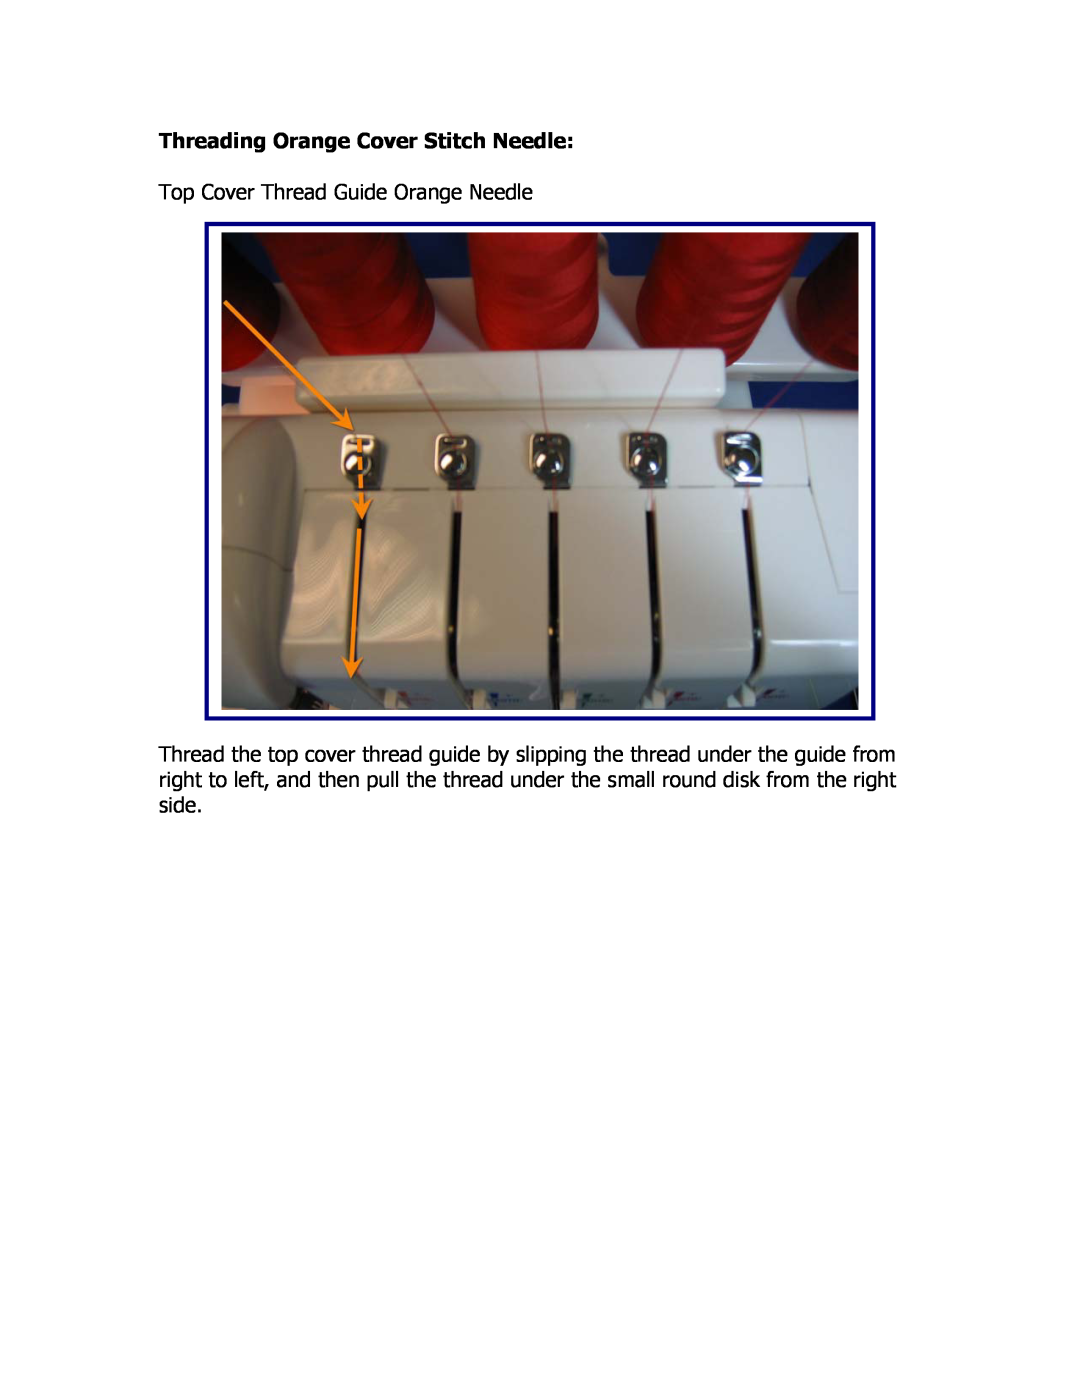 Singer 14T957DC manual Threading Orange Cover Stitch Needle, Top Cover Thread Guide Orange Needle 